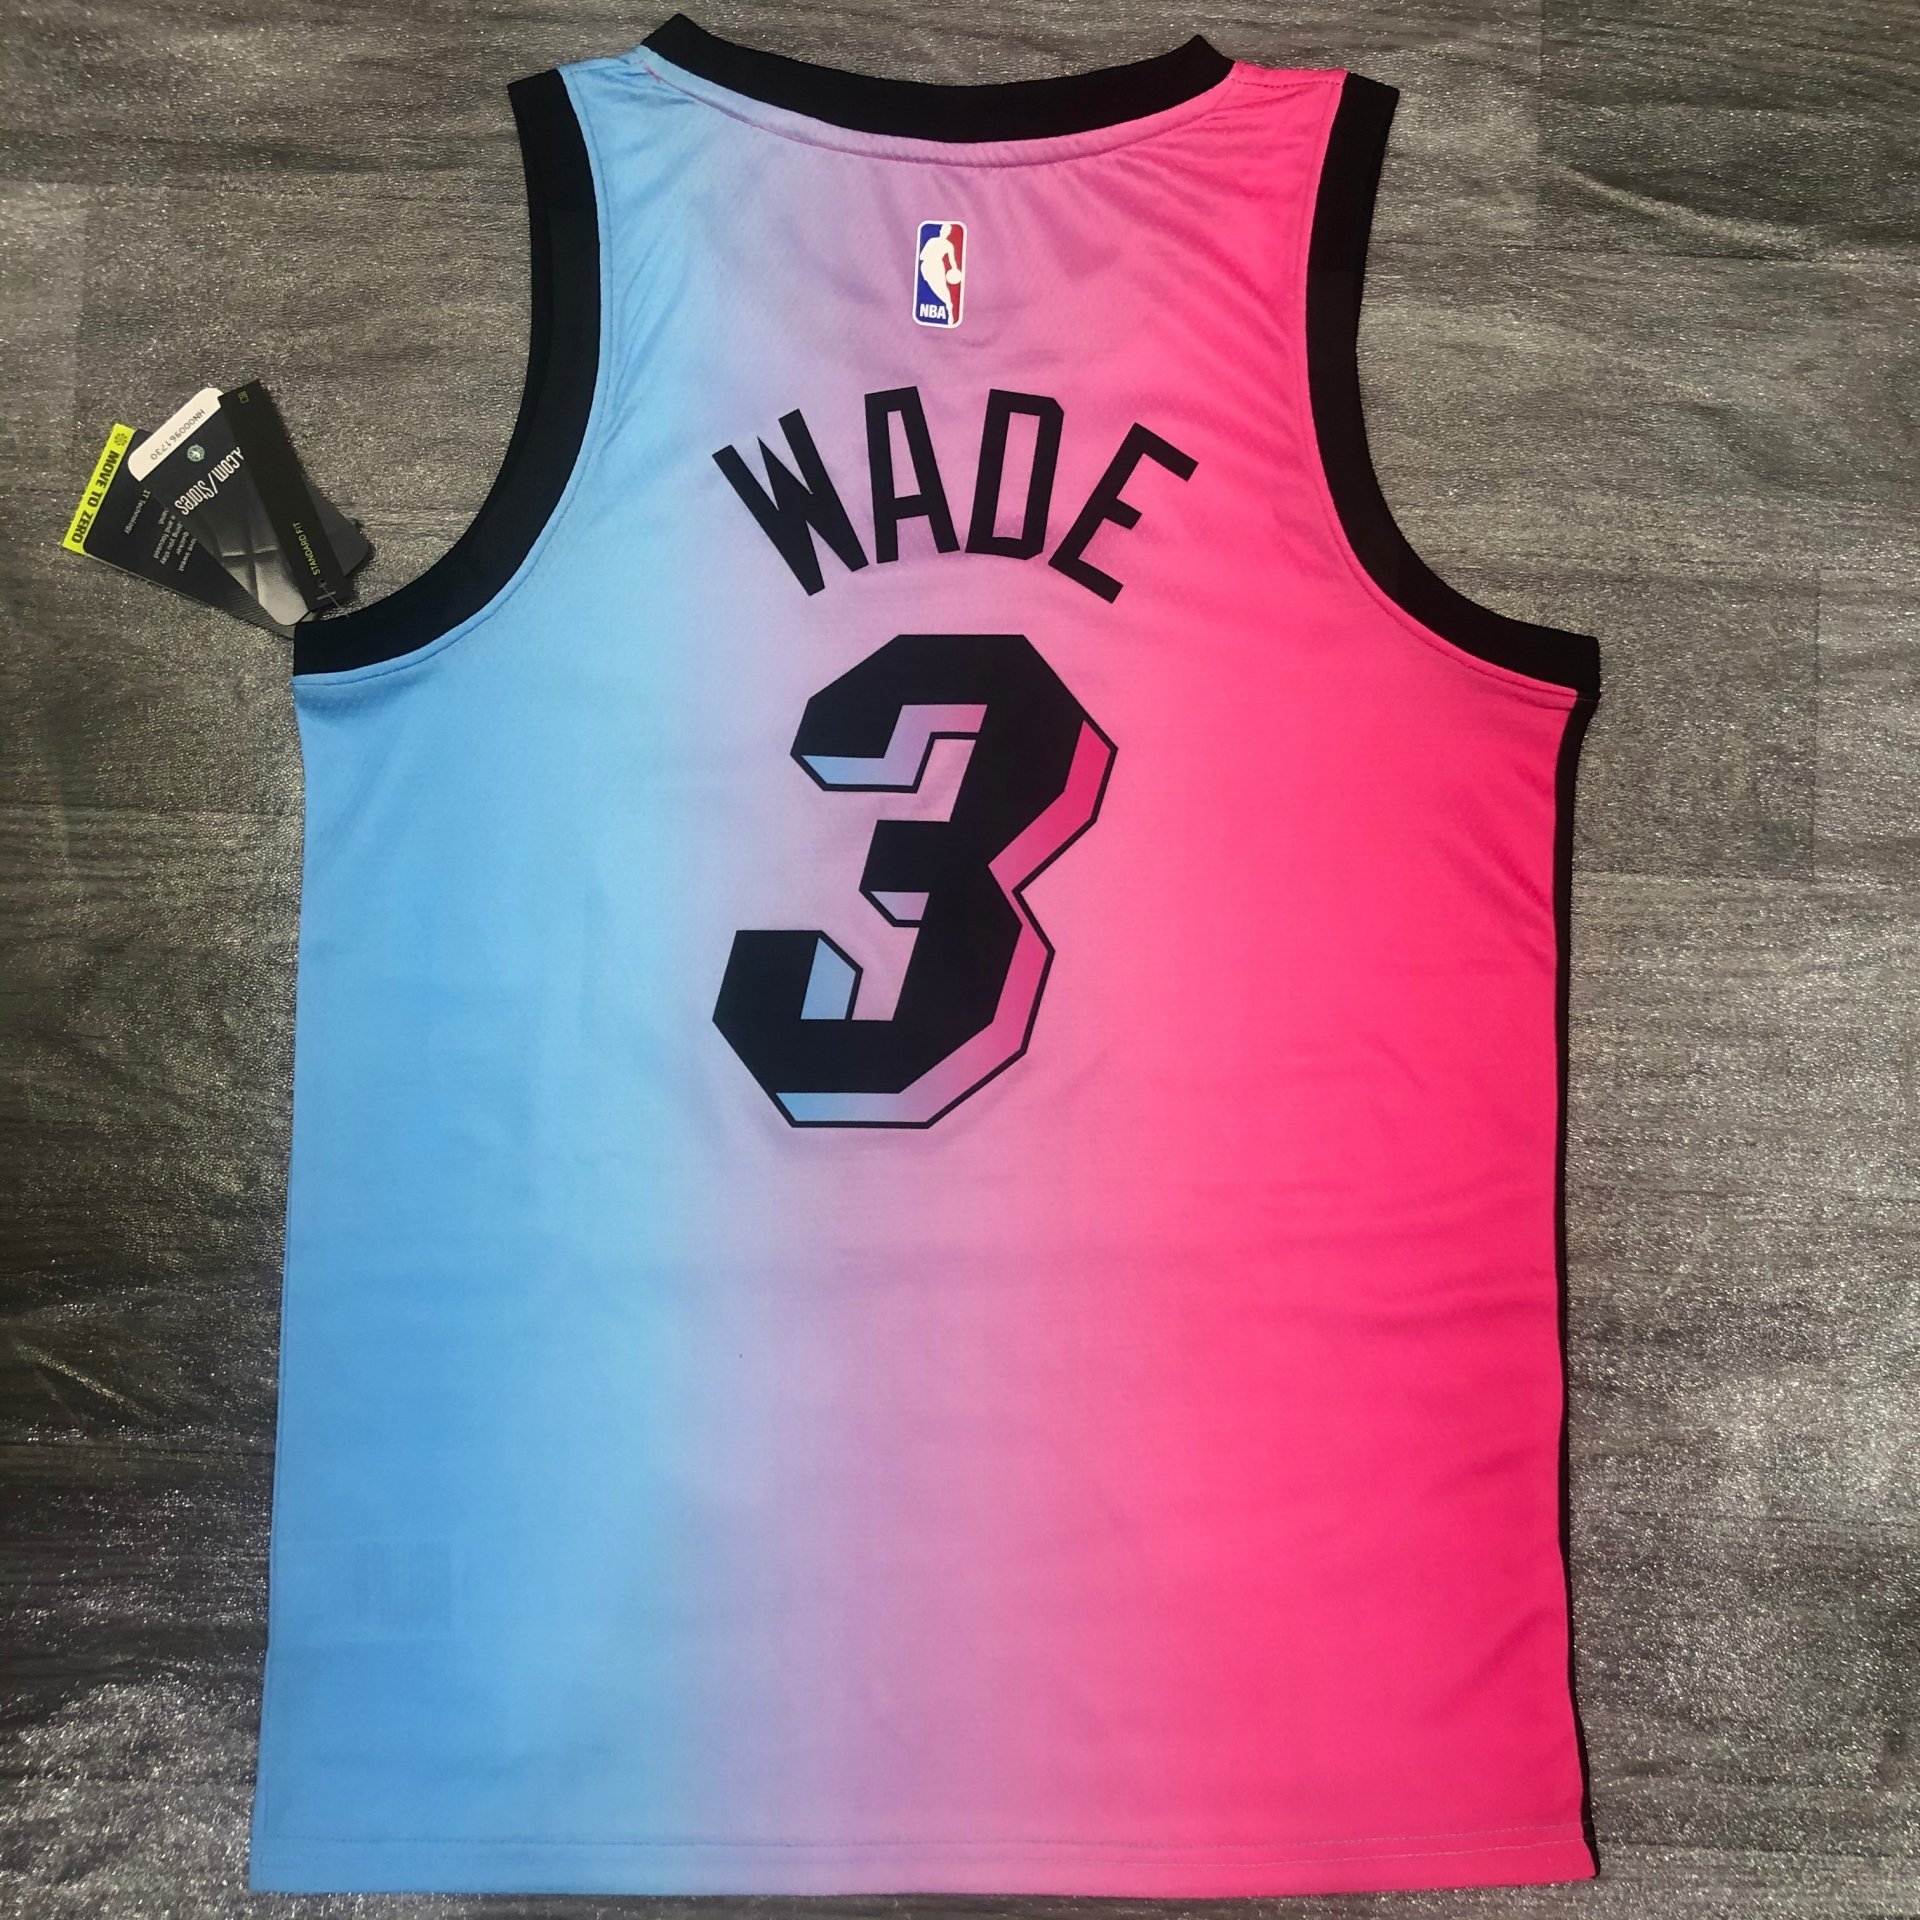 Dwayne Wade Miami Heat Vice City Jersey Pink